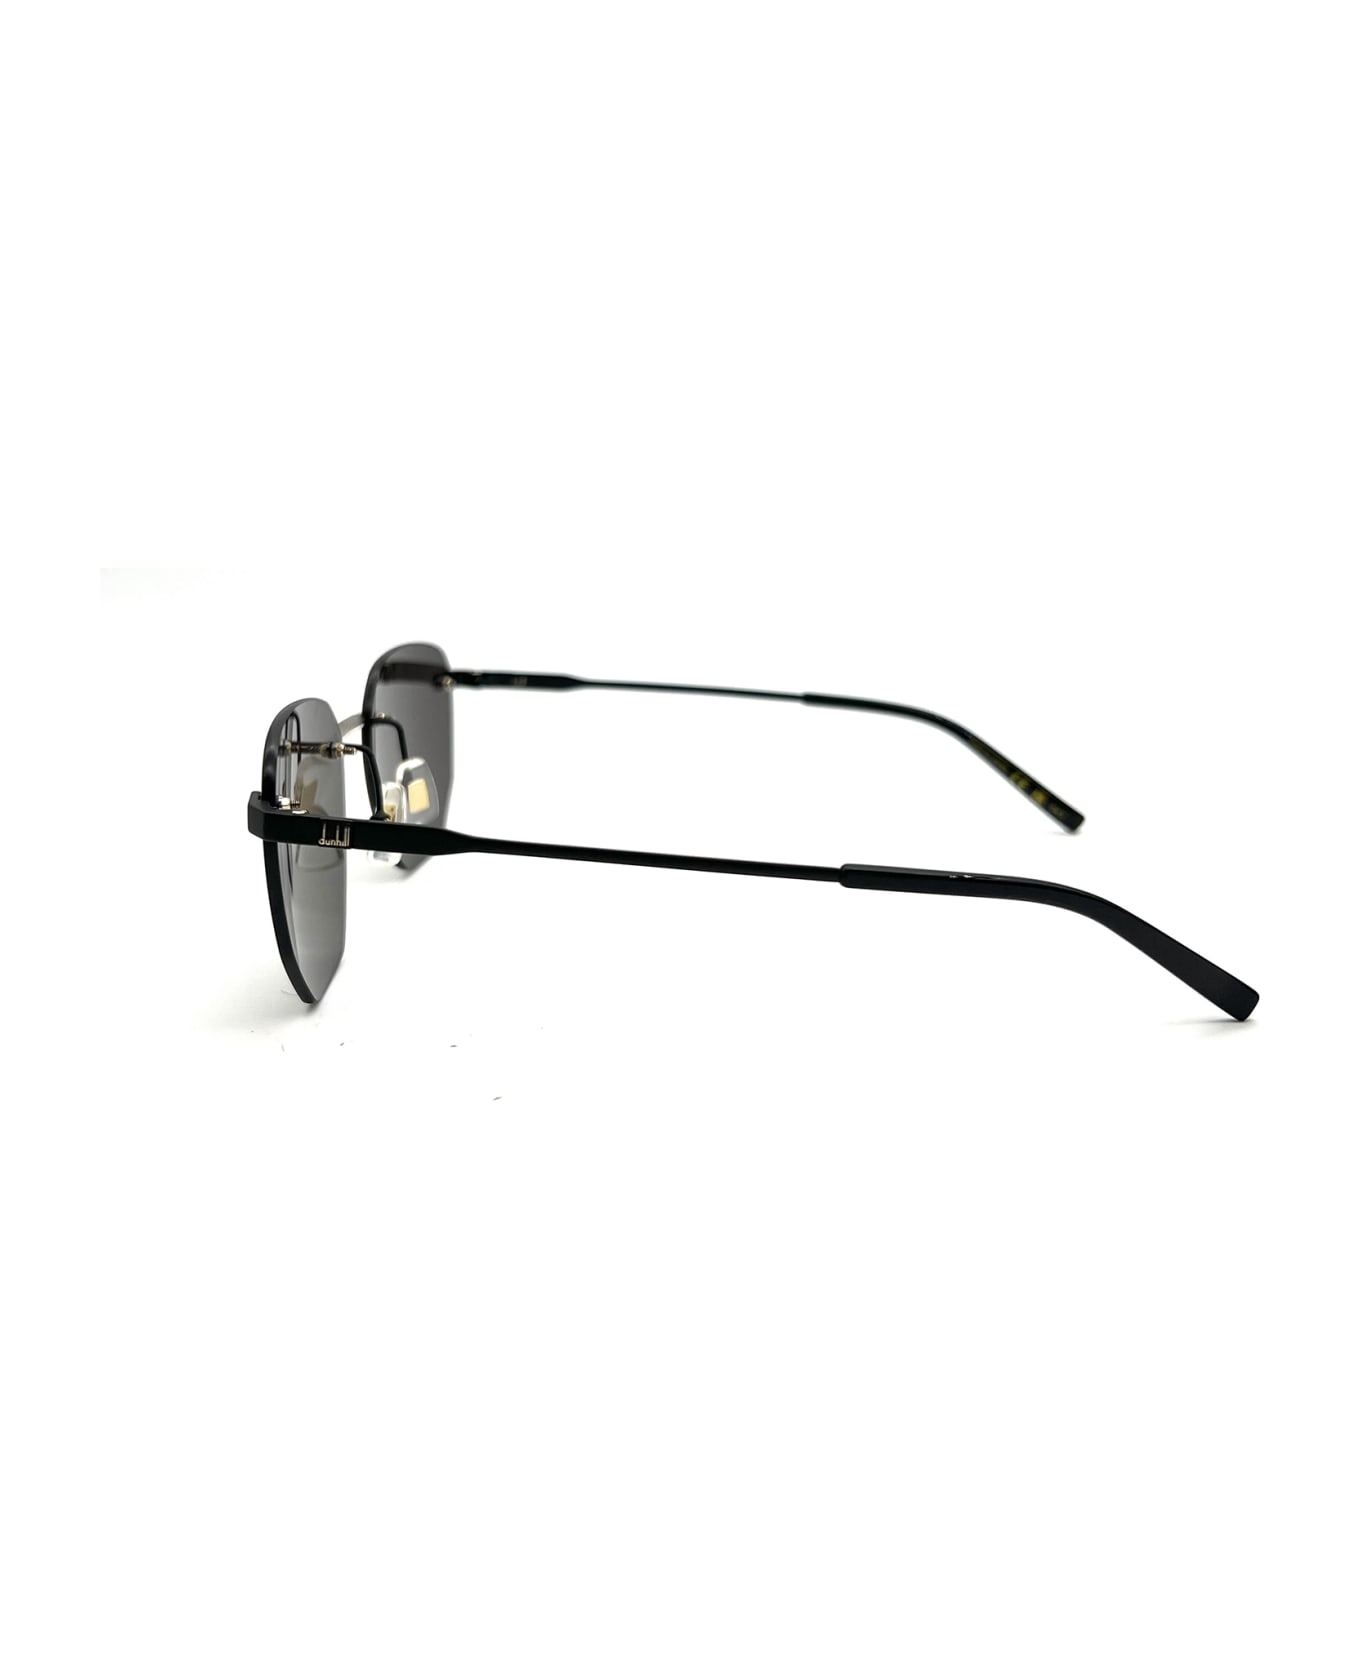 Dunhill DU0066S Sunglasses - LINDA FARROW Tortoiseshell Nieve Sunglasses